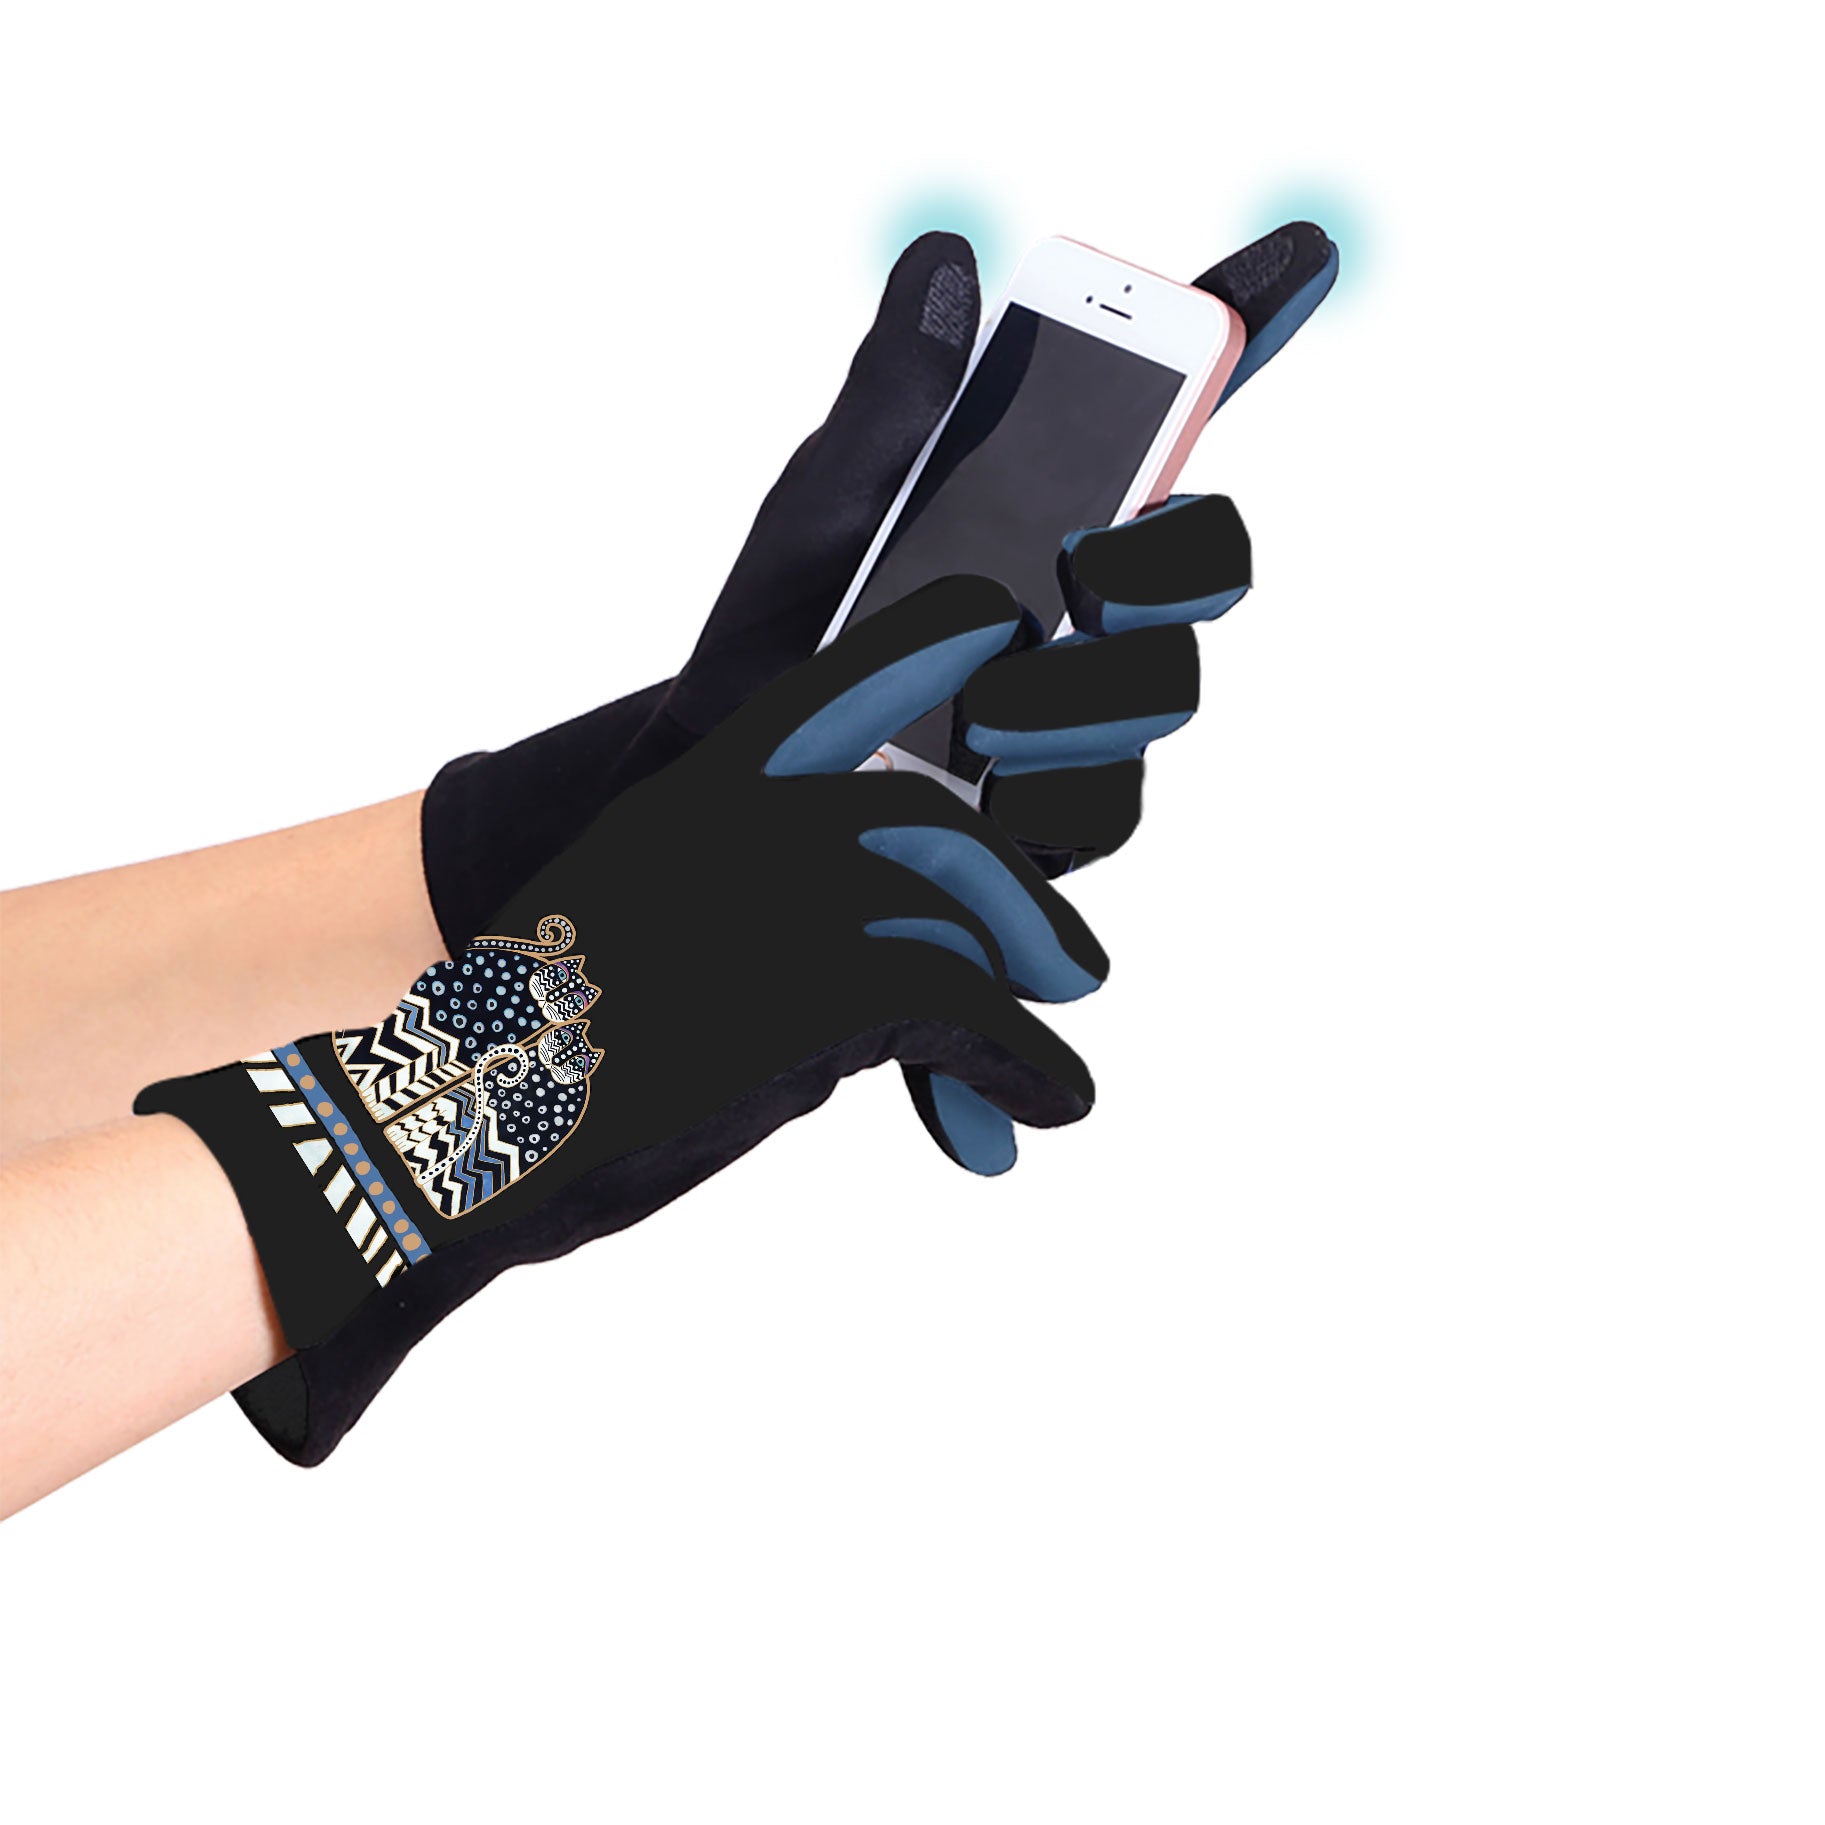 Laurel Burch "Polka Dot Gatos" Texting Gloves